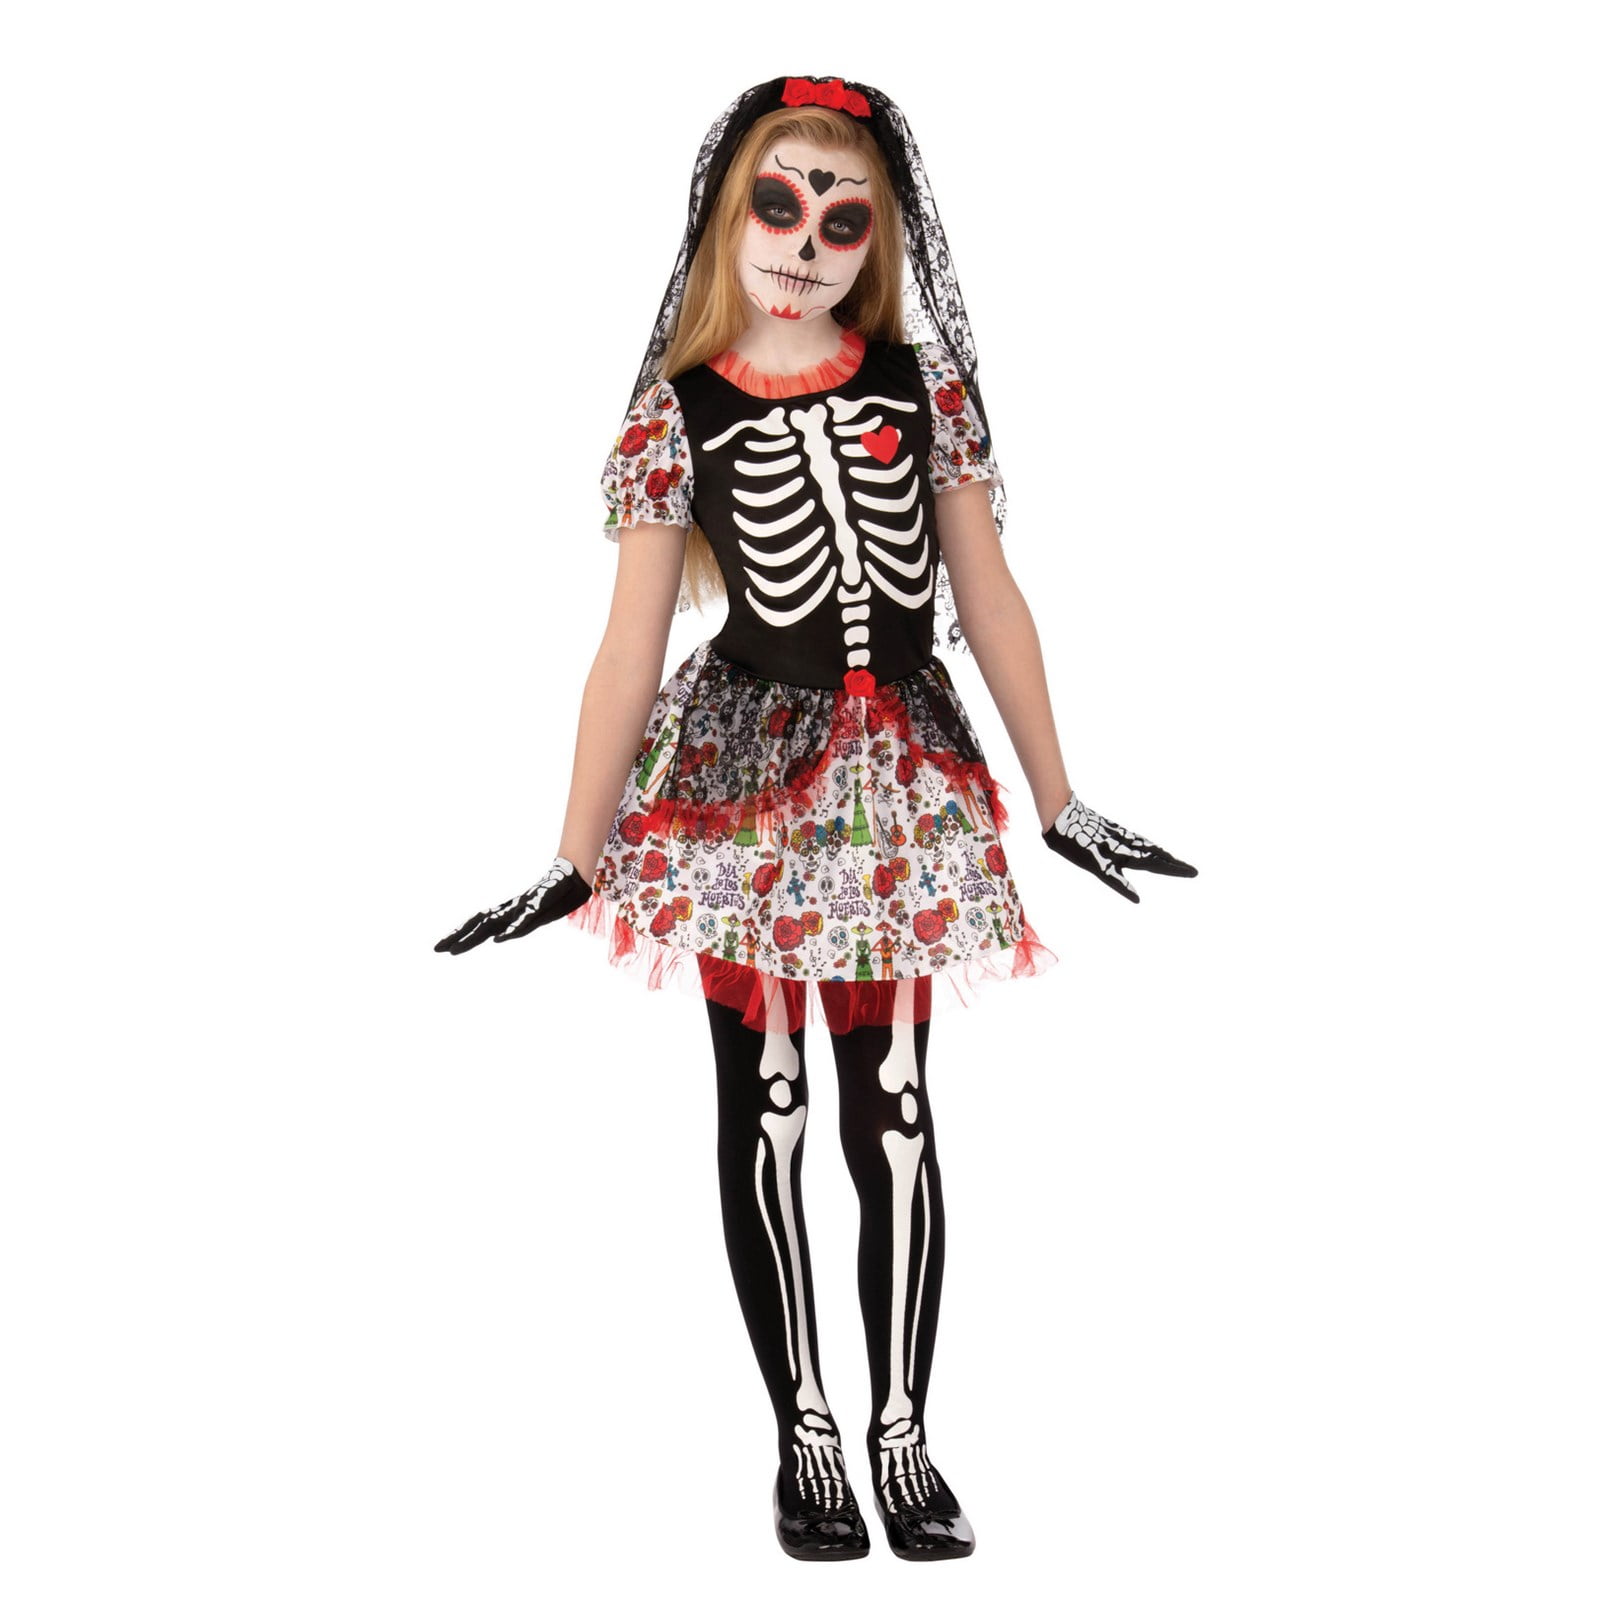 Skull Of The Dead Tights Girls Fancy Dress Halloween Skeleton Kids Costume New 